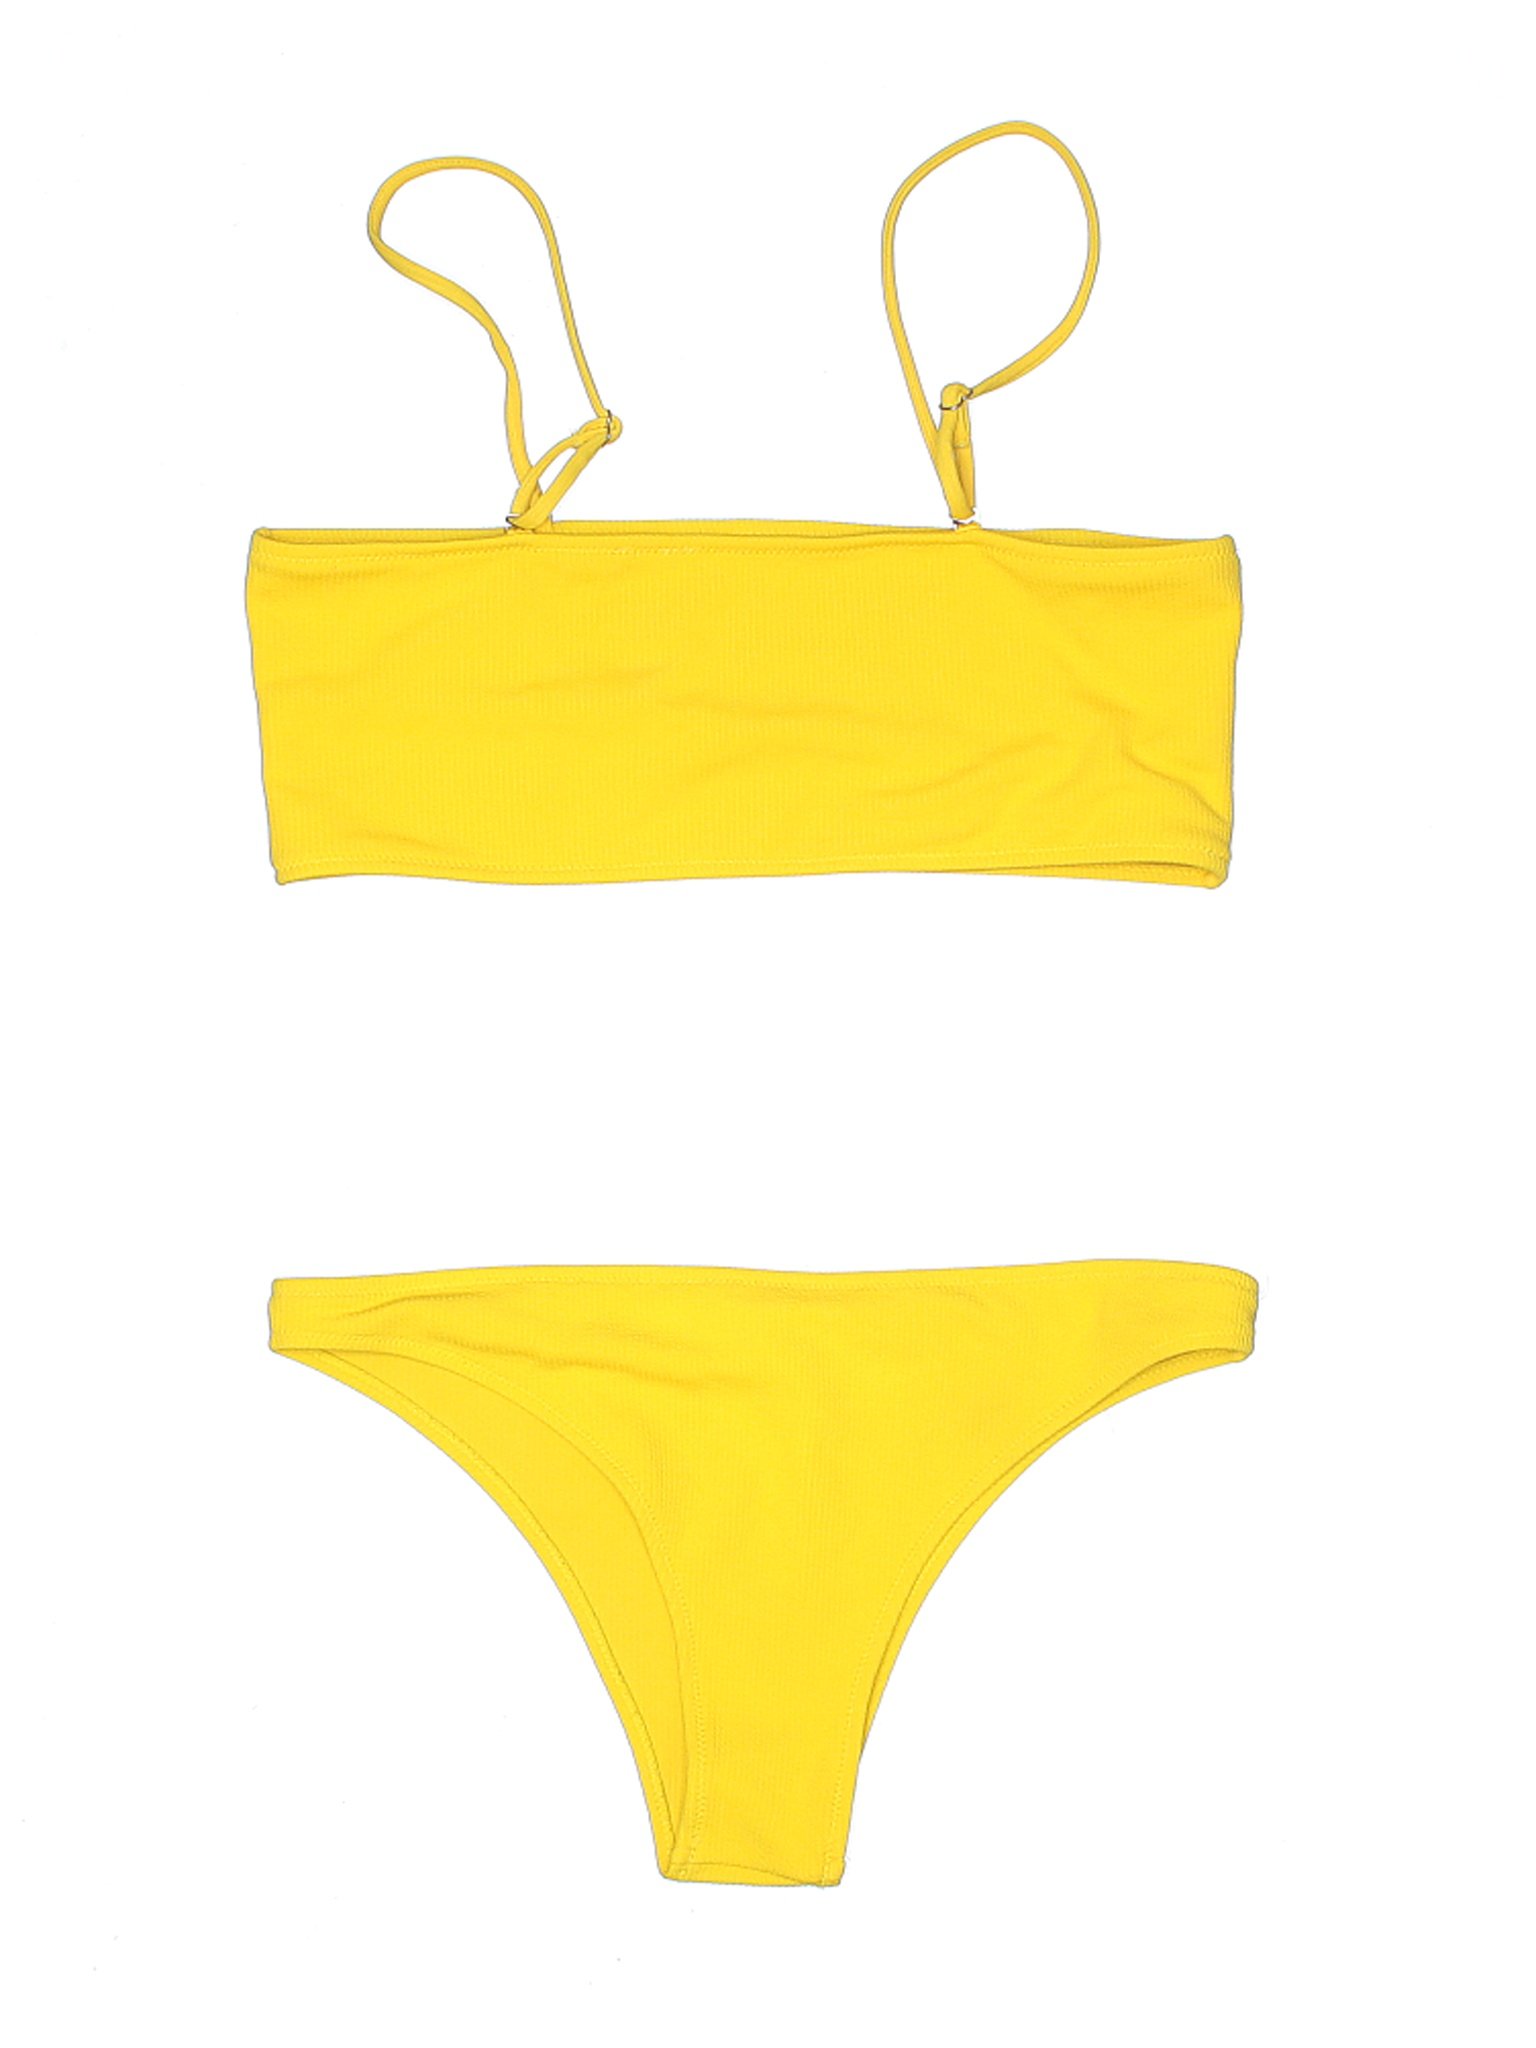 Unbranded Women Yellow Two Piece Swimsuit XL | eBay